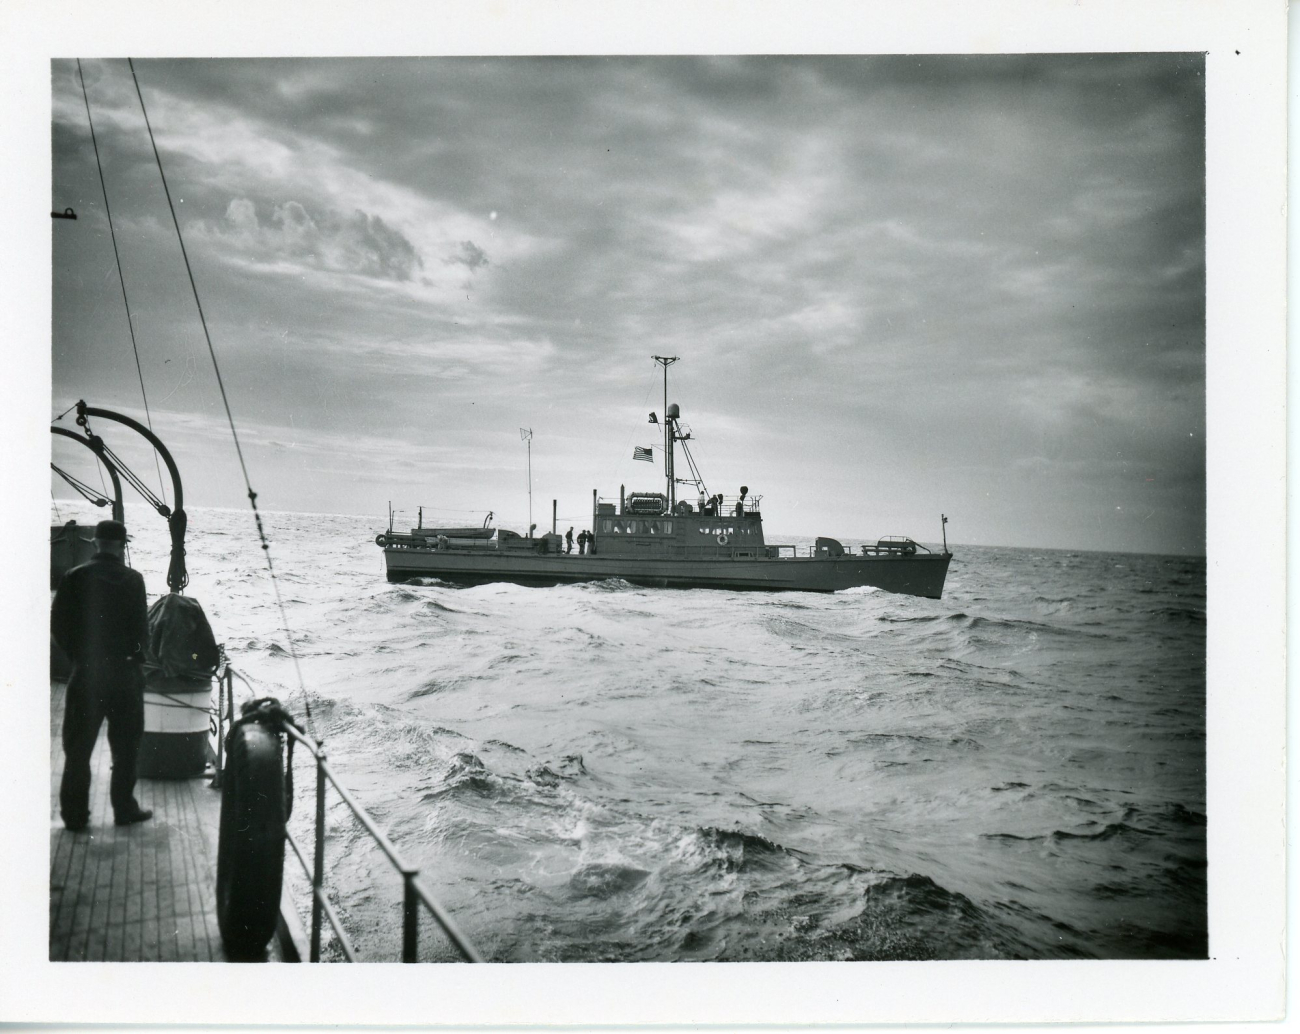 USC&GS; Ship BOWEN